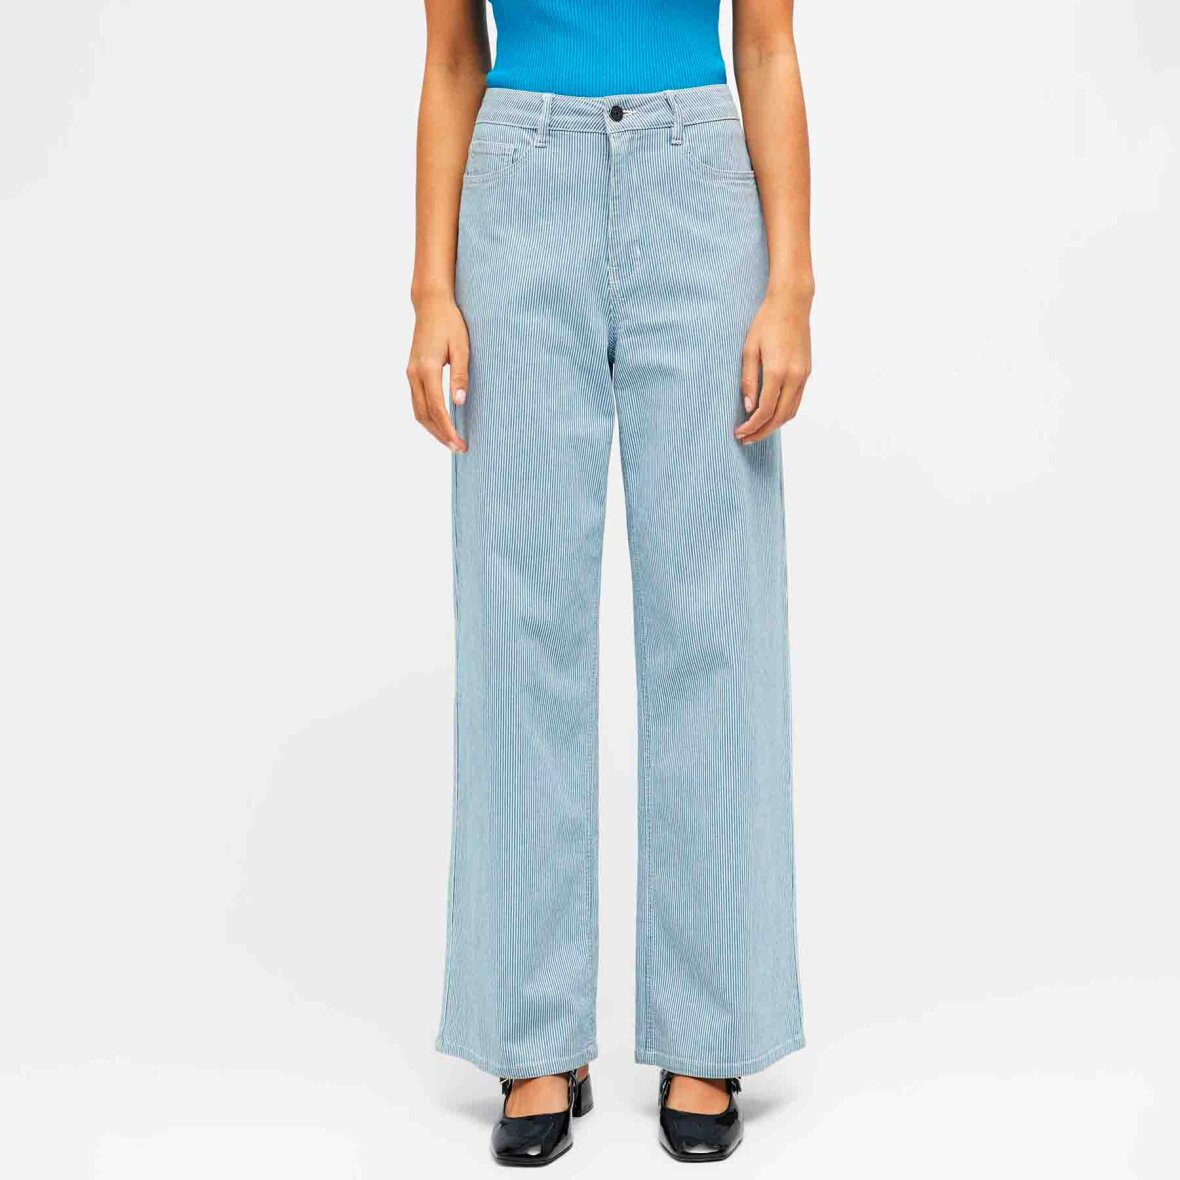 Object - Objmoji mw wide long jeans